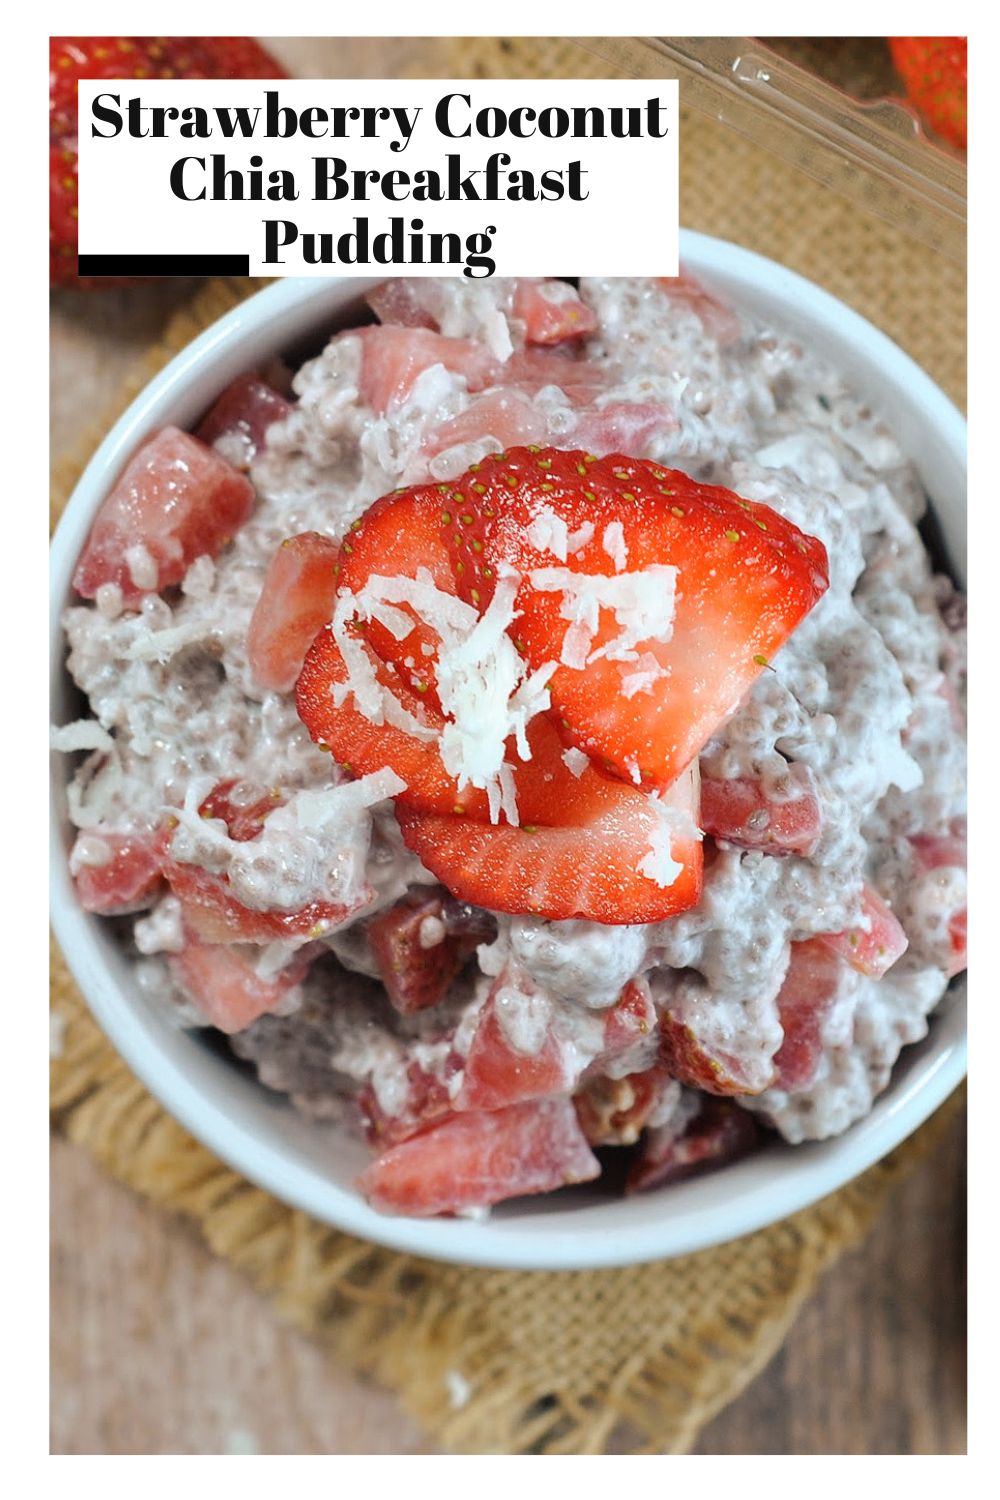 Strawberry Coconut Chia Breakfast Pudding via @preventionrd